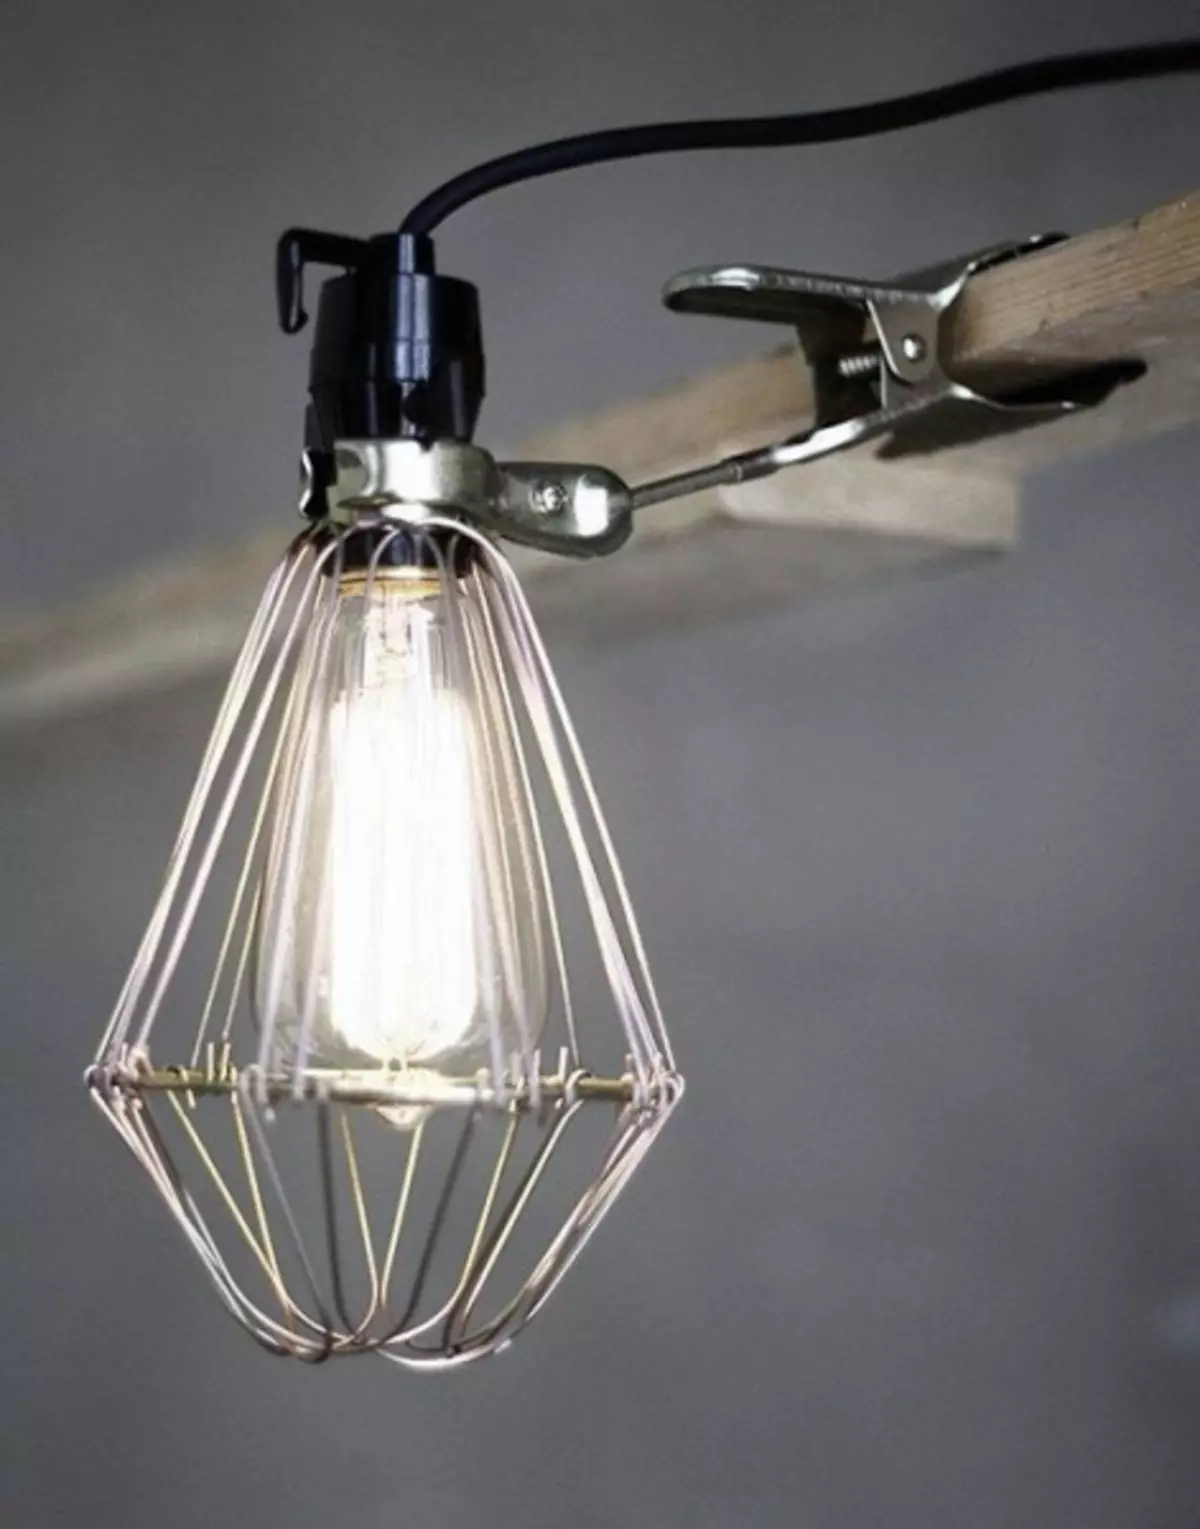 50 foto's van lampe in industriële styl